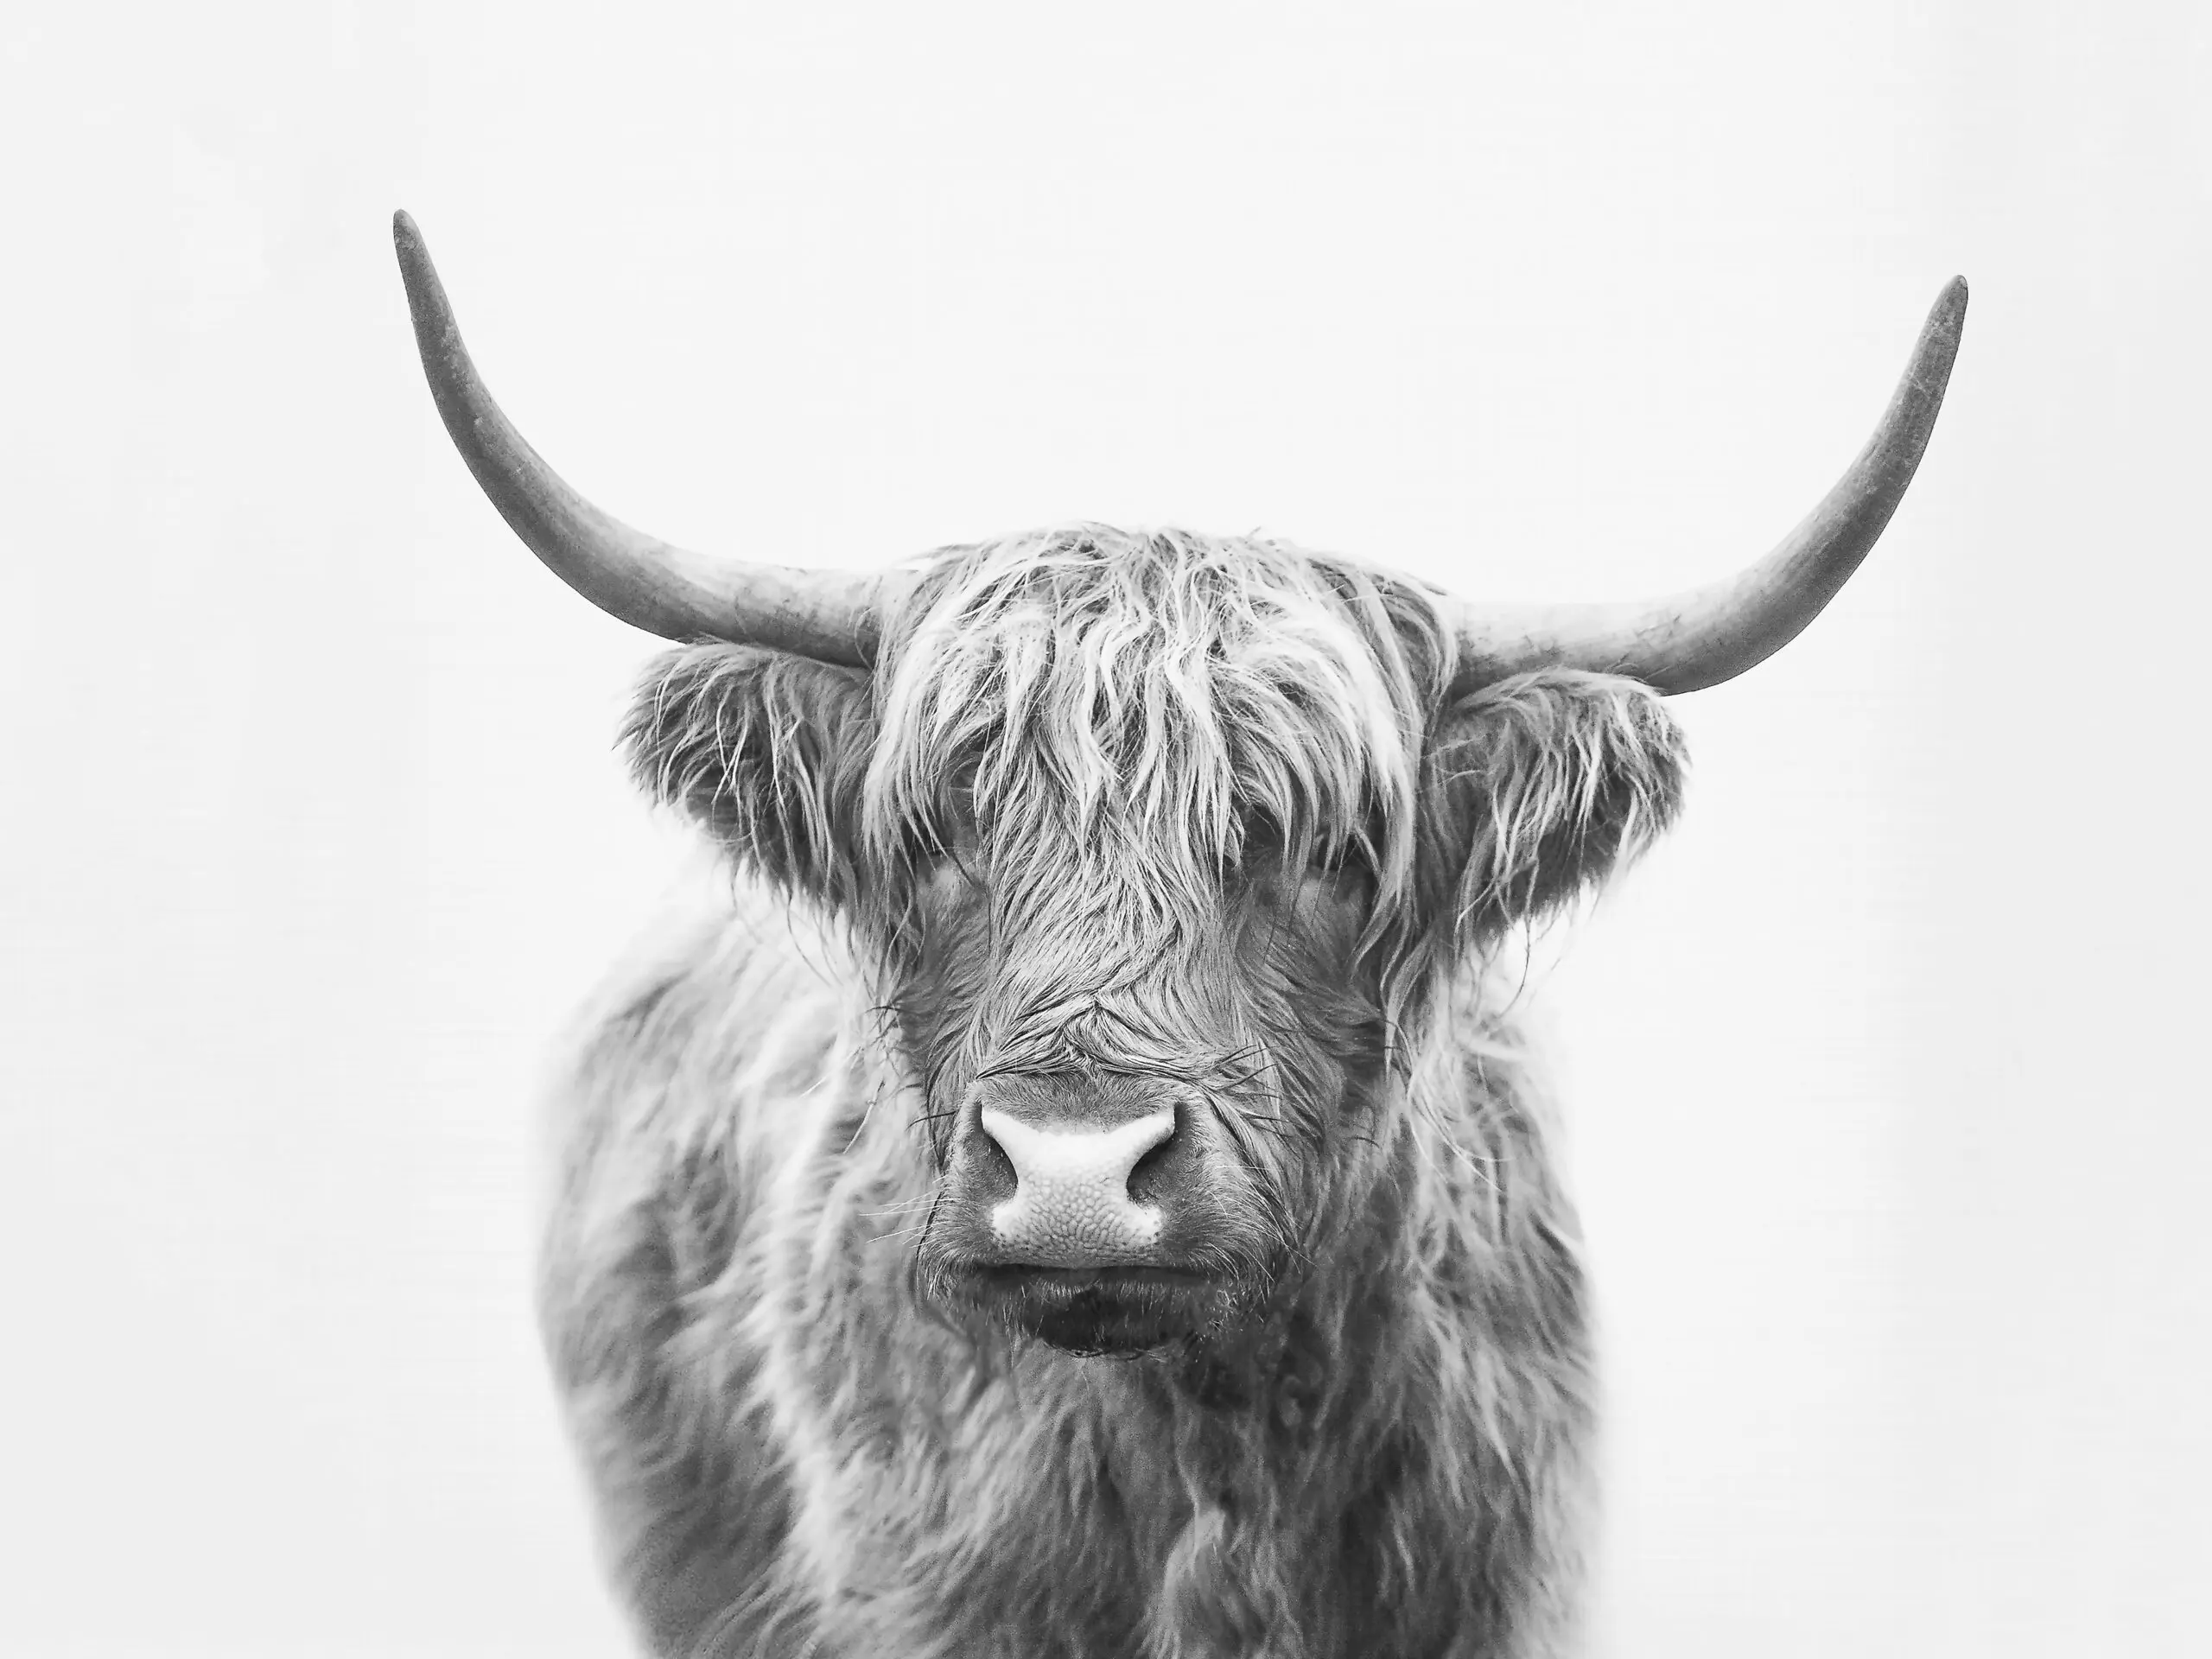 Wandbild (19394) Highland Bull by Kathrin Pindar präsentiert: Tiere